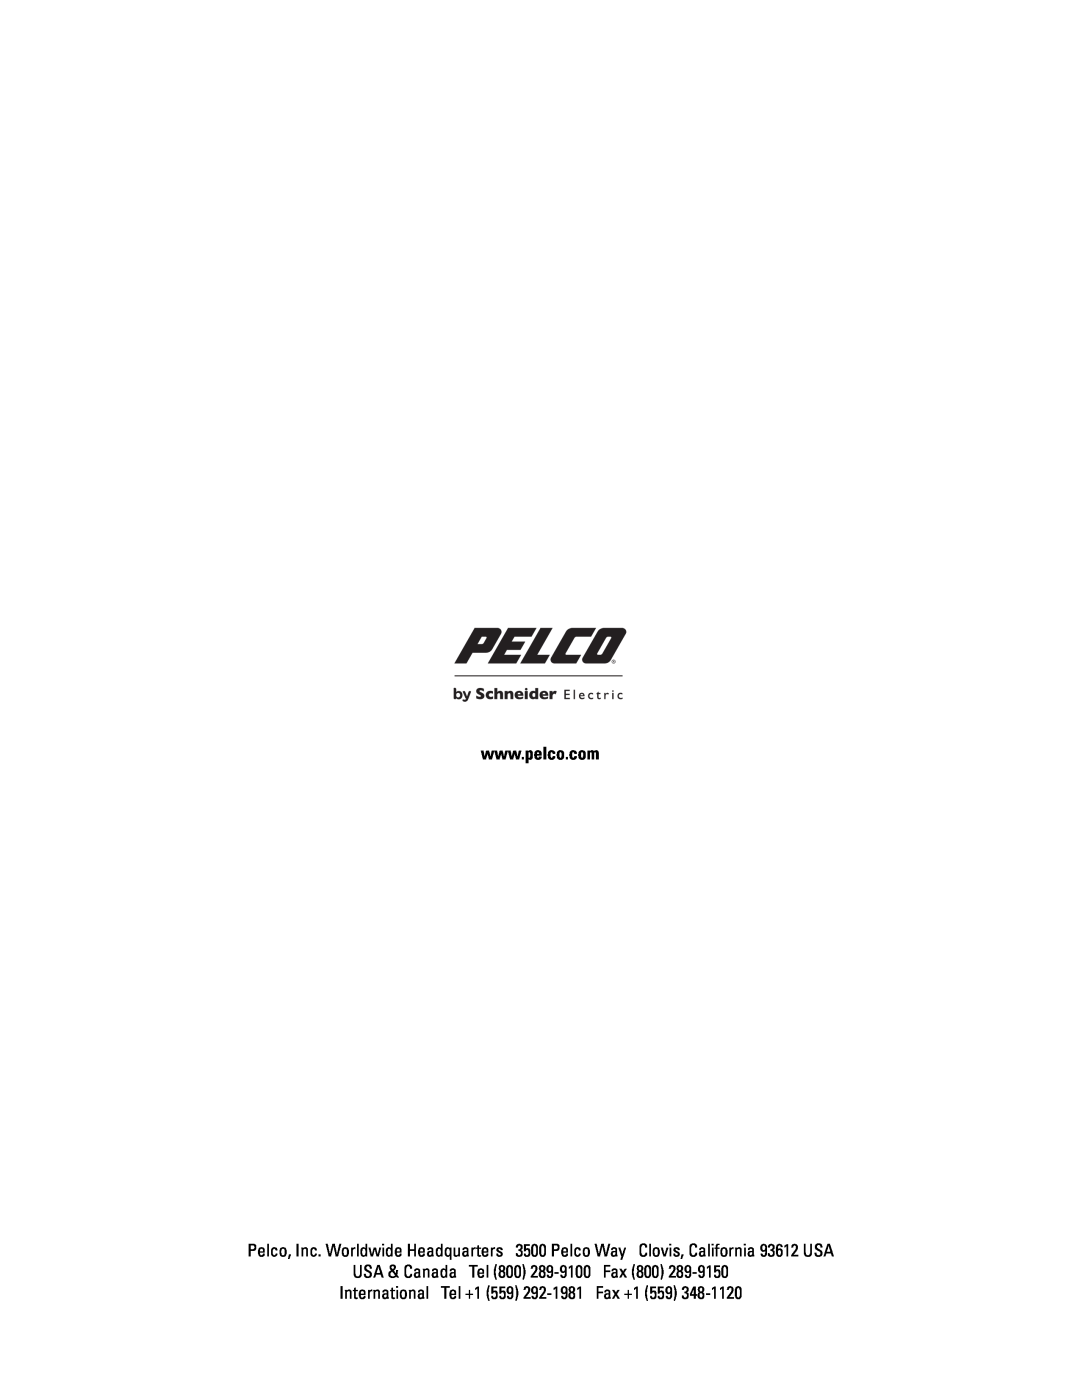 Pelco X1431SM-B (7/09) manual USA & Canada Tel 800 289-9100Fax, International Tel +1 559 292-1981Fax +1 